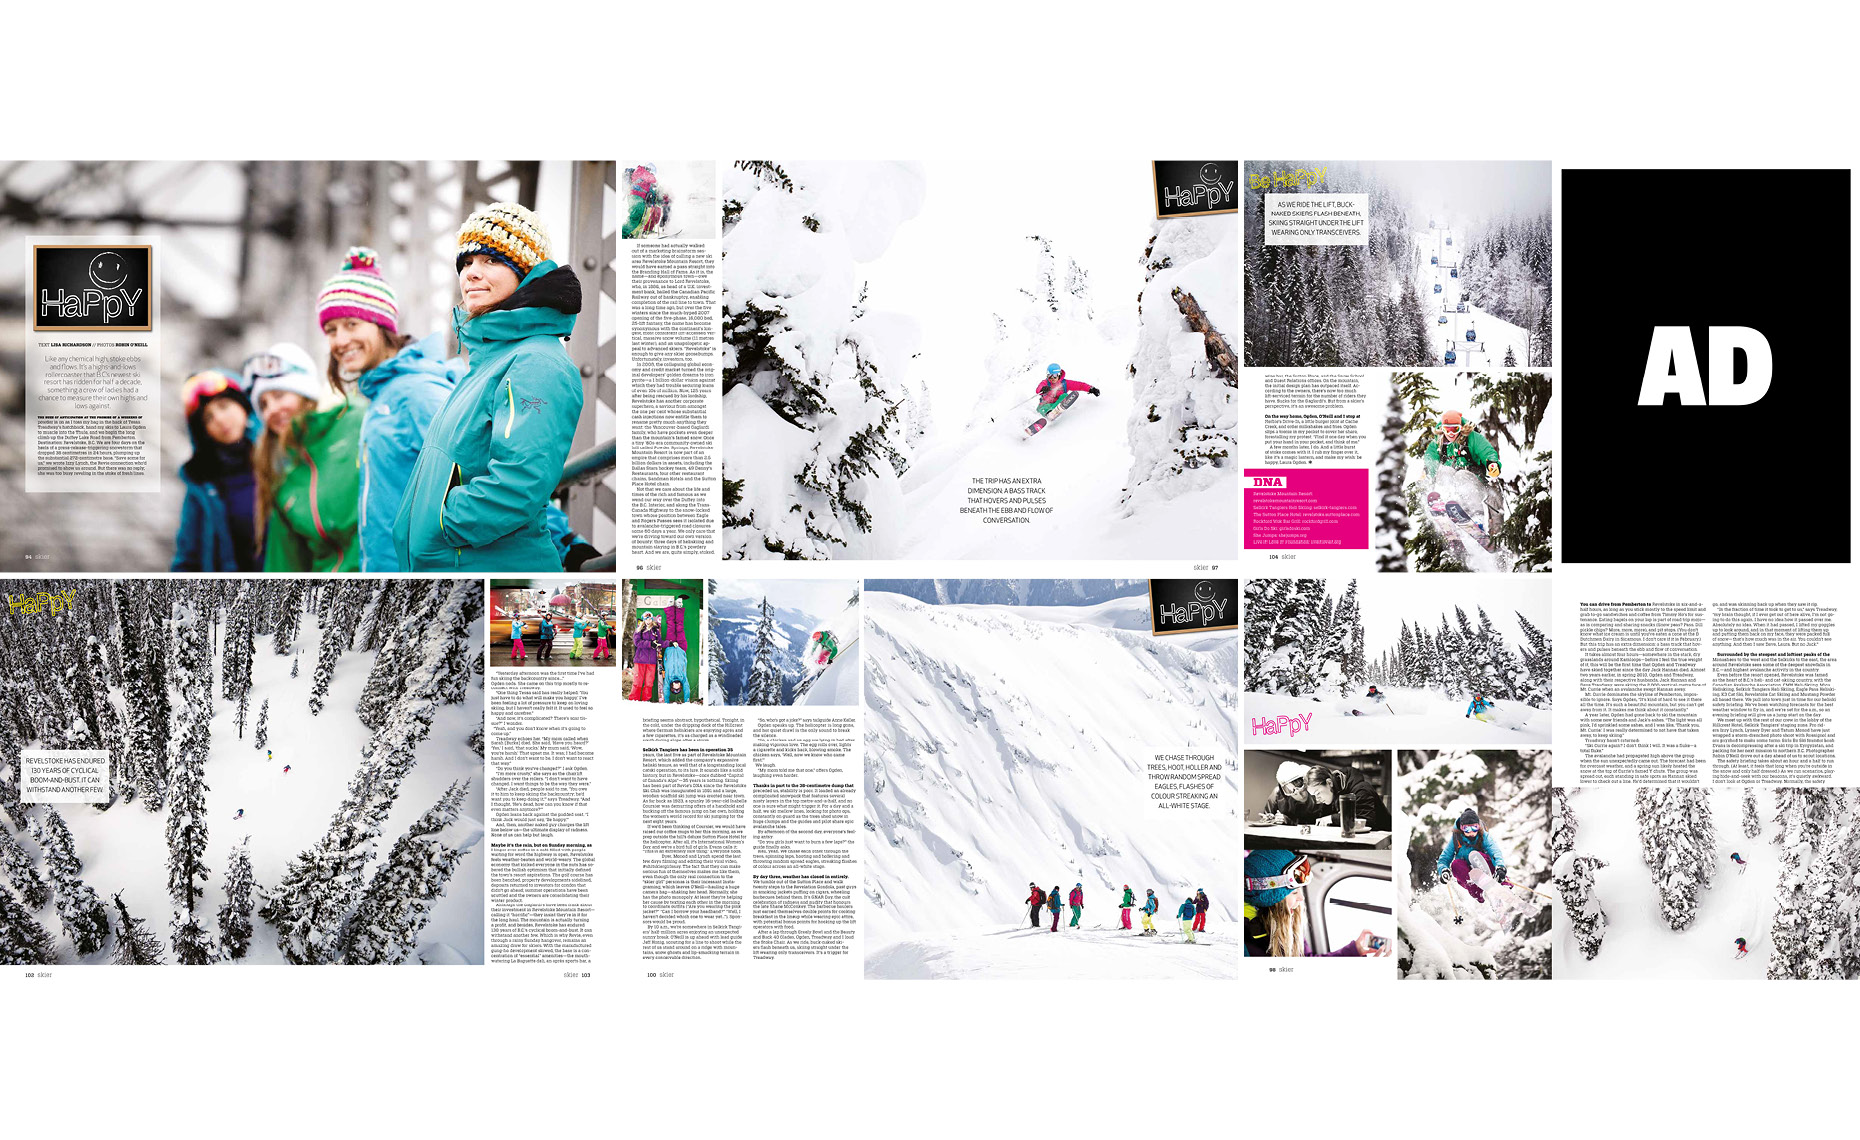 Banff Alberta Canada skier article spread in skier magazine by whistler photographer